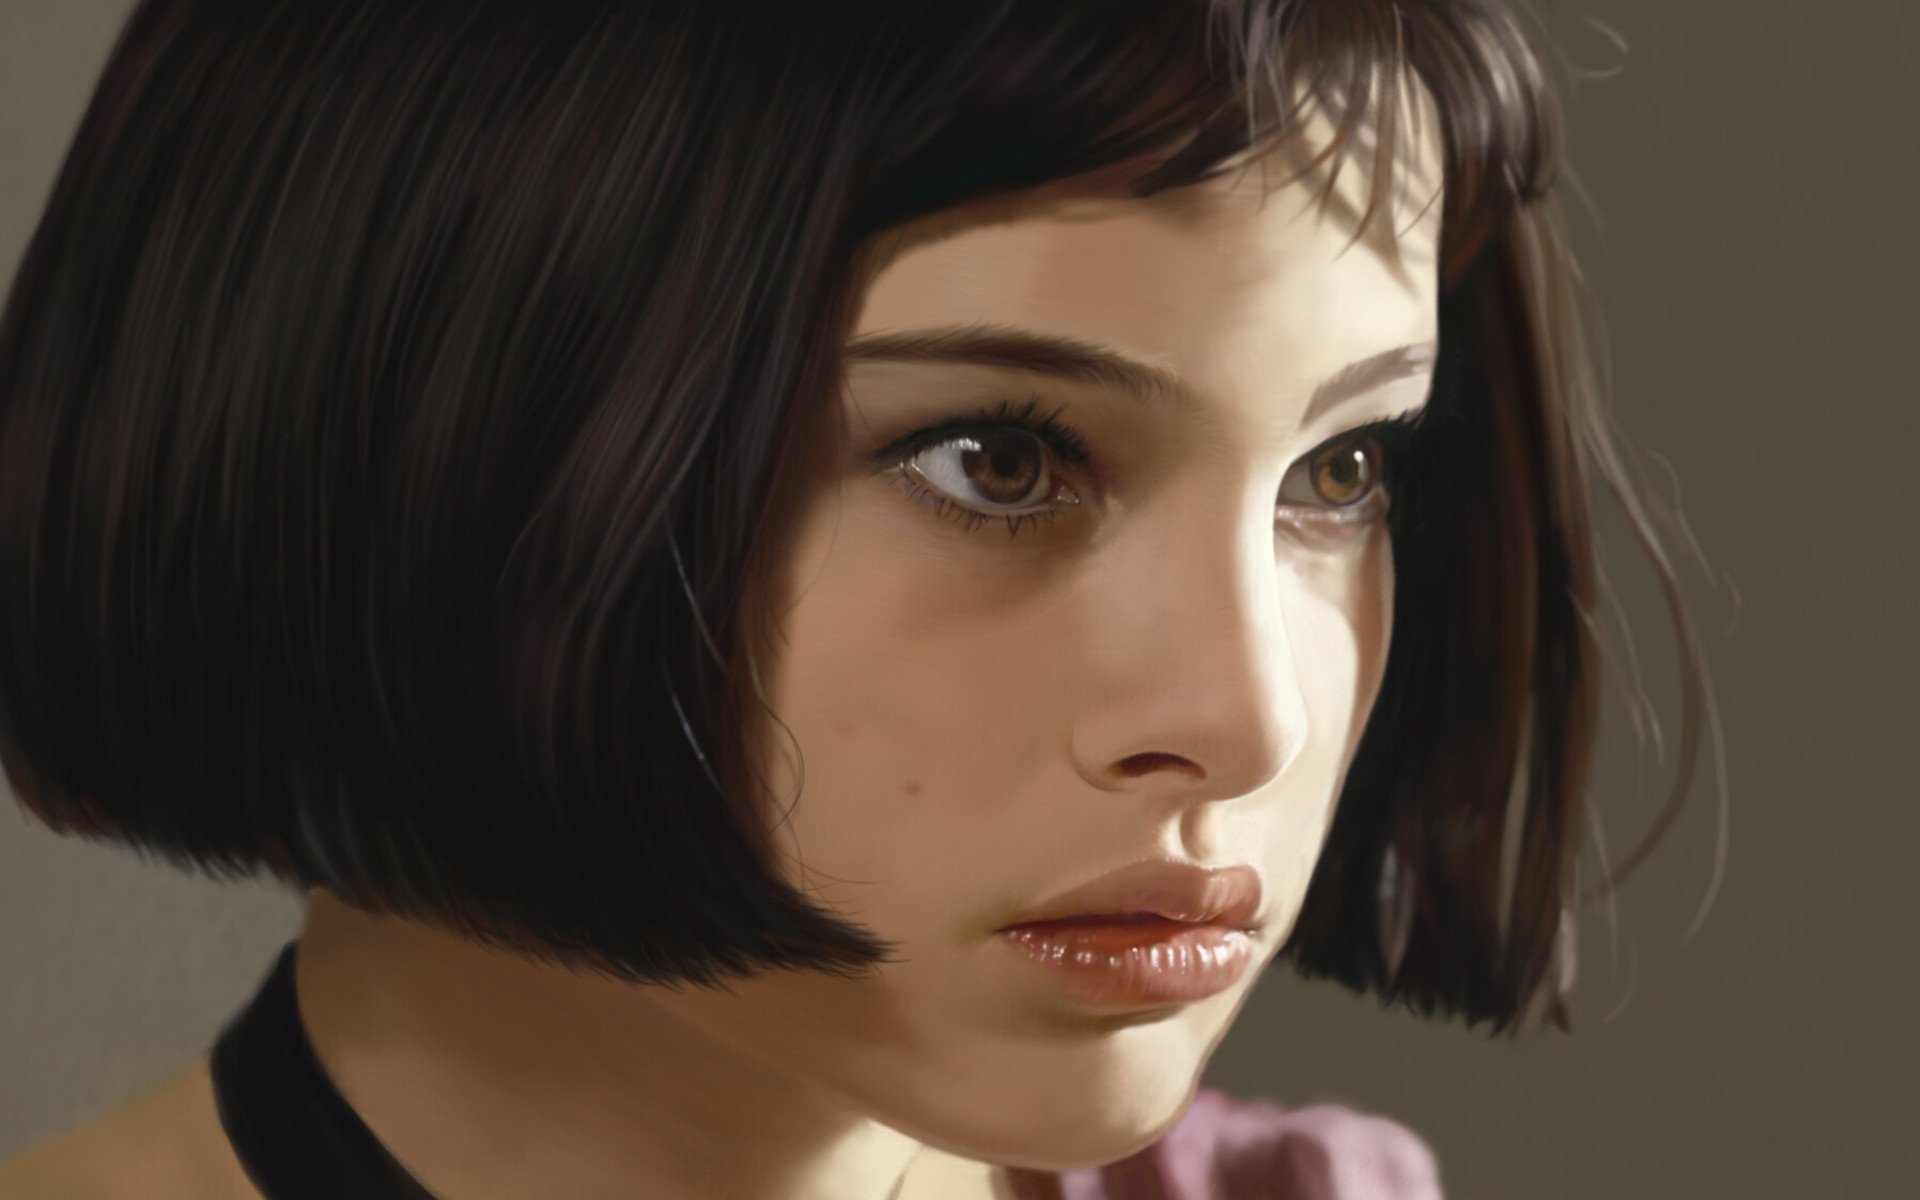 Leon: Mathilda portrayed by Natalie Portman, The Professional. 1920x1200 HD Wallpaper.